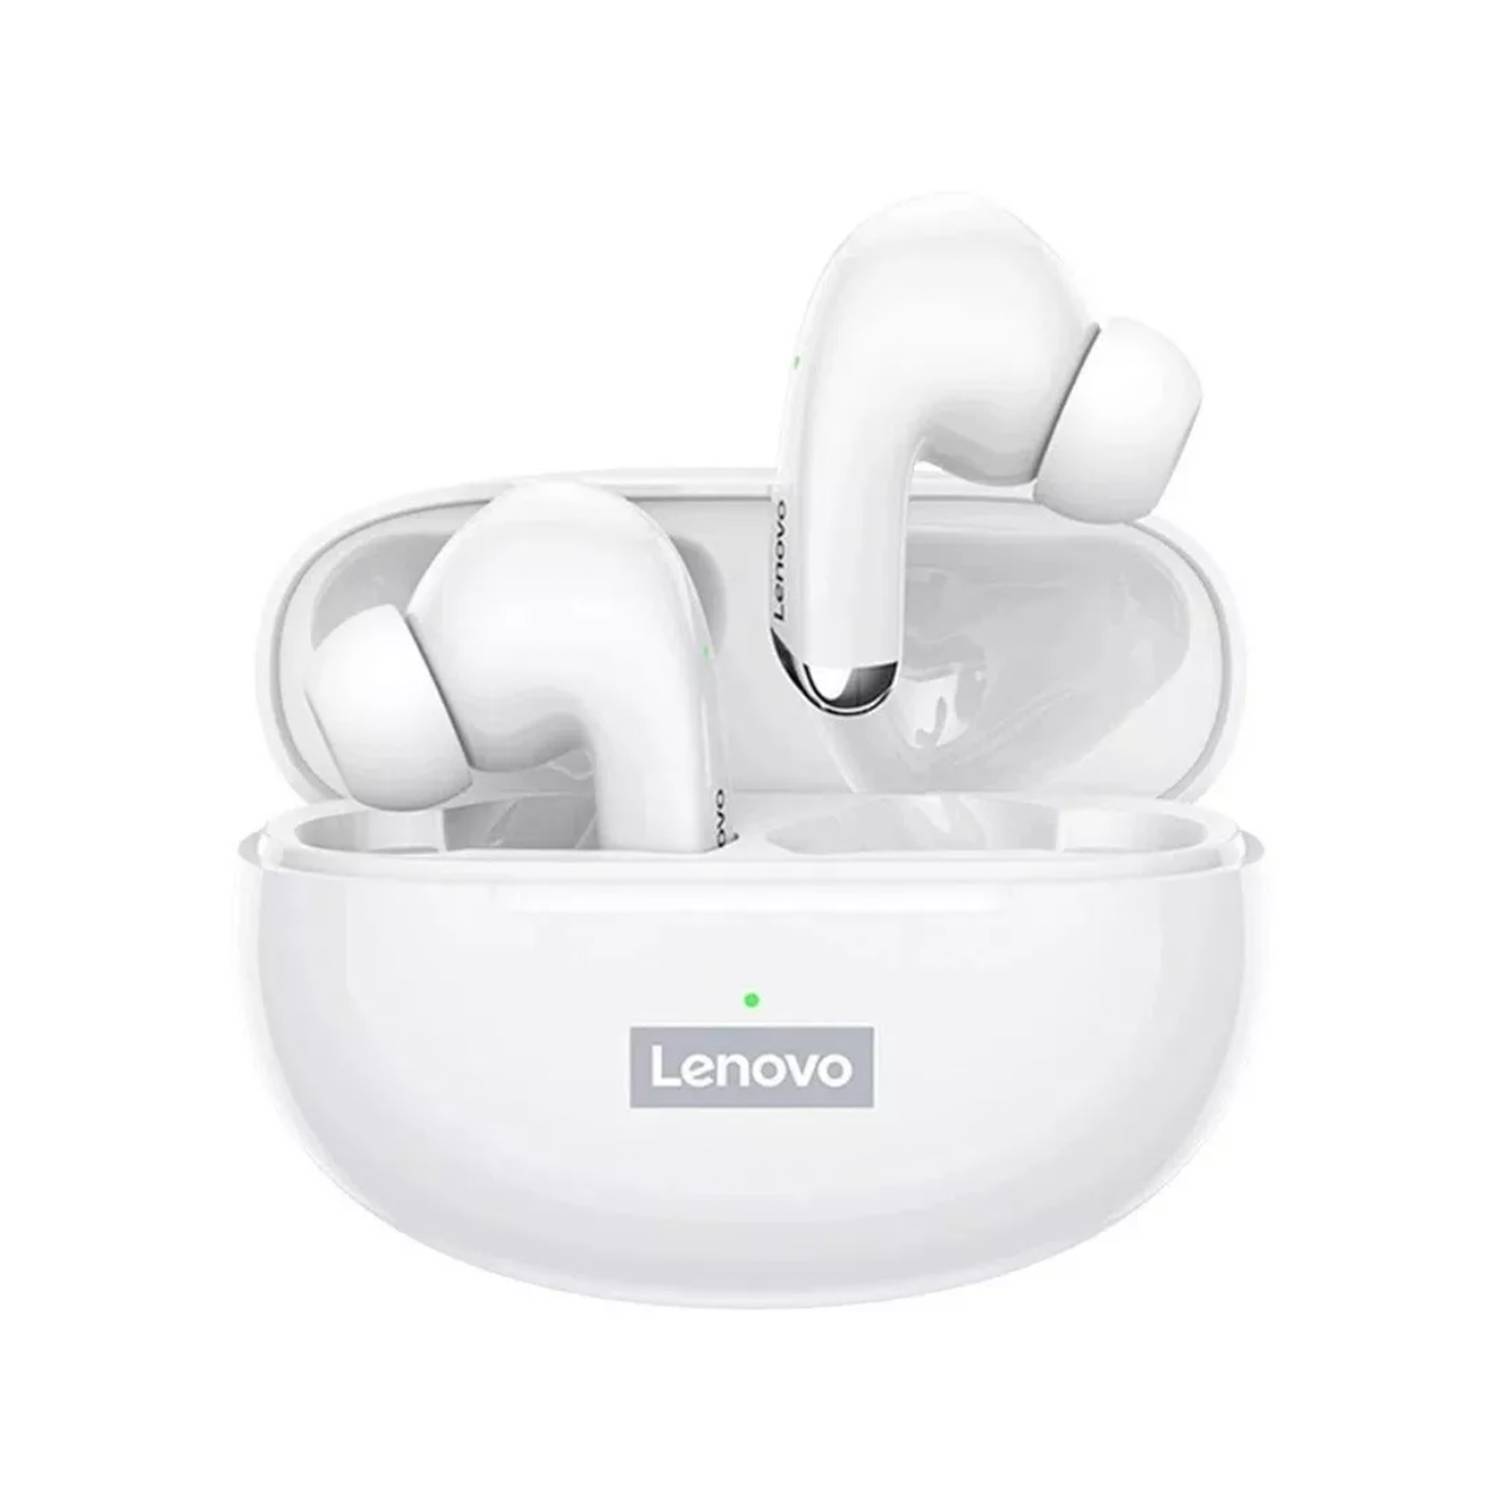 Lenovo - Thinkplus Auriculares inalámbricos Bluetooth LP5 Think Plus –  lachollotienda